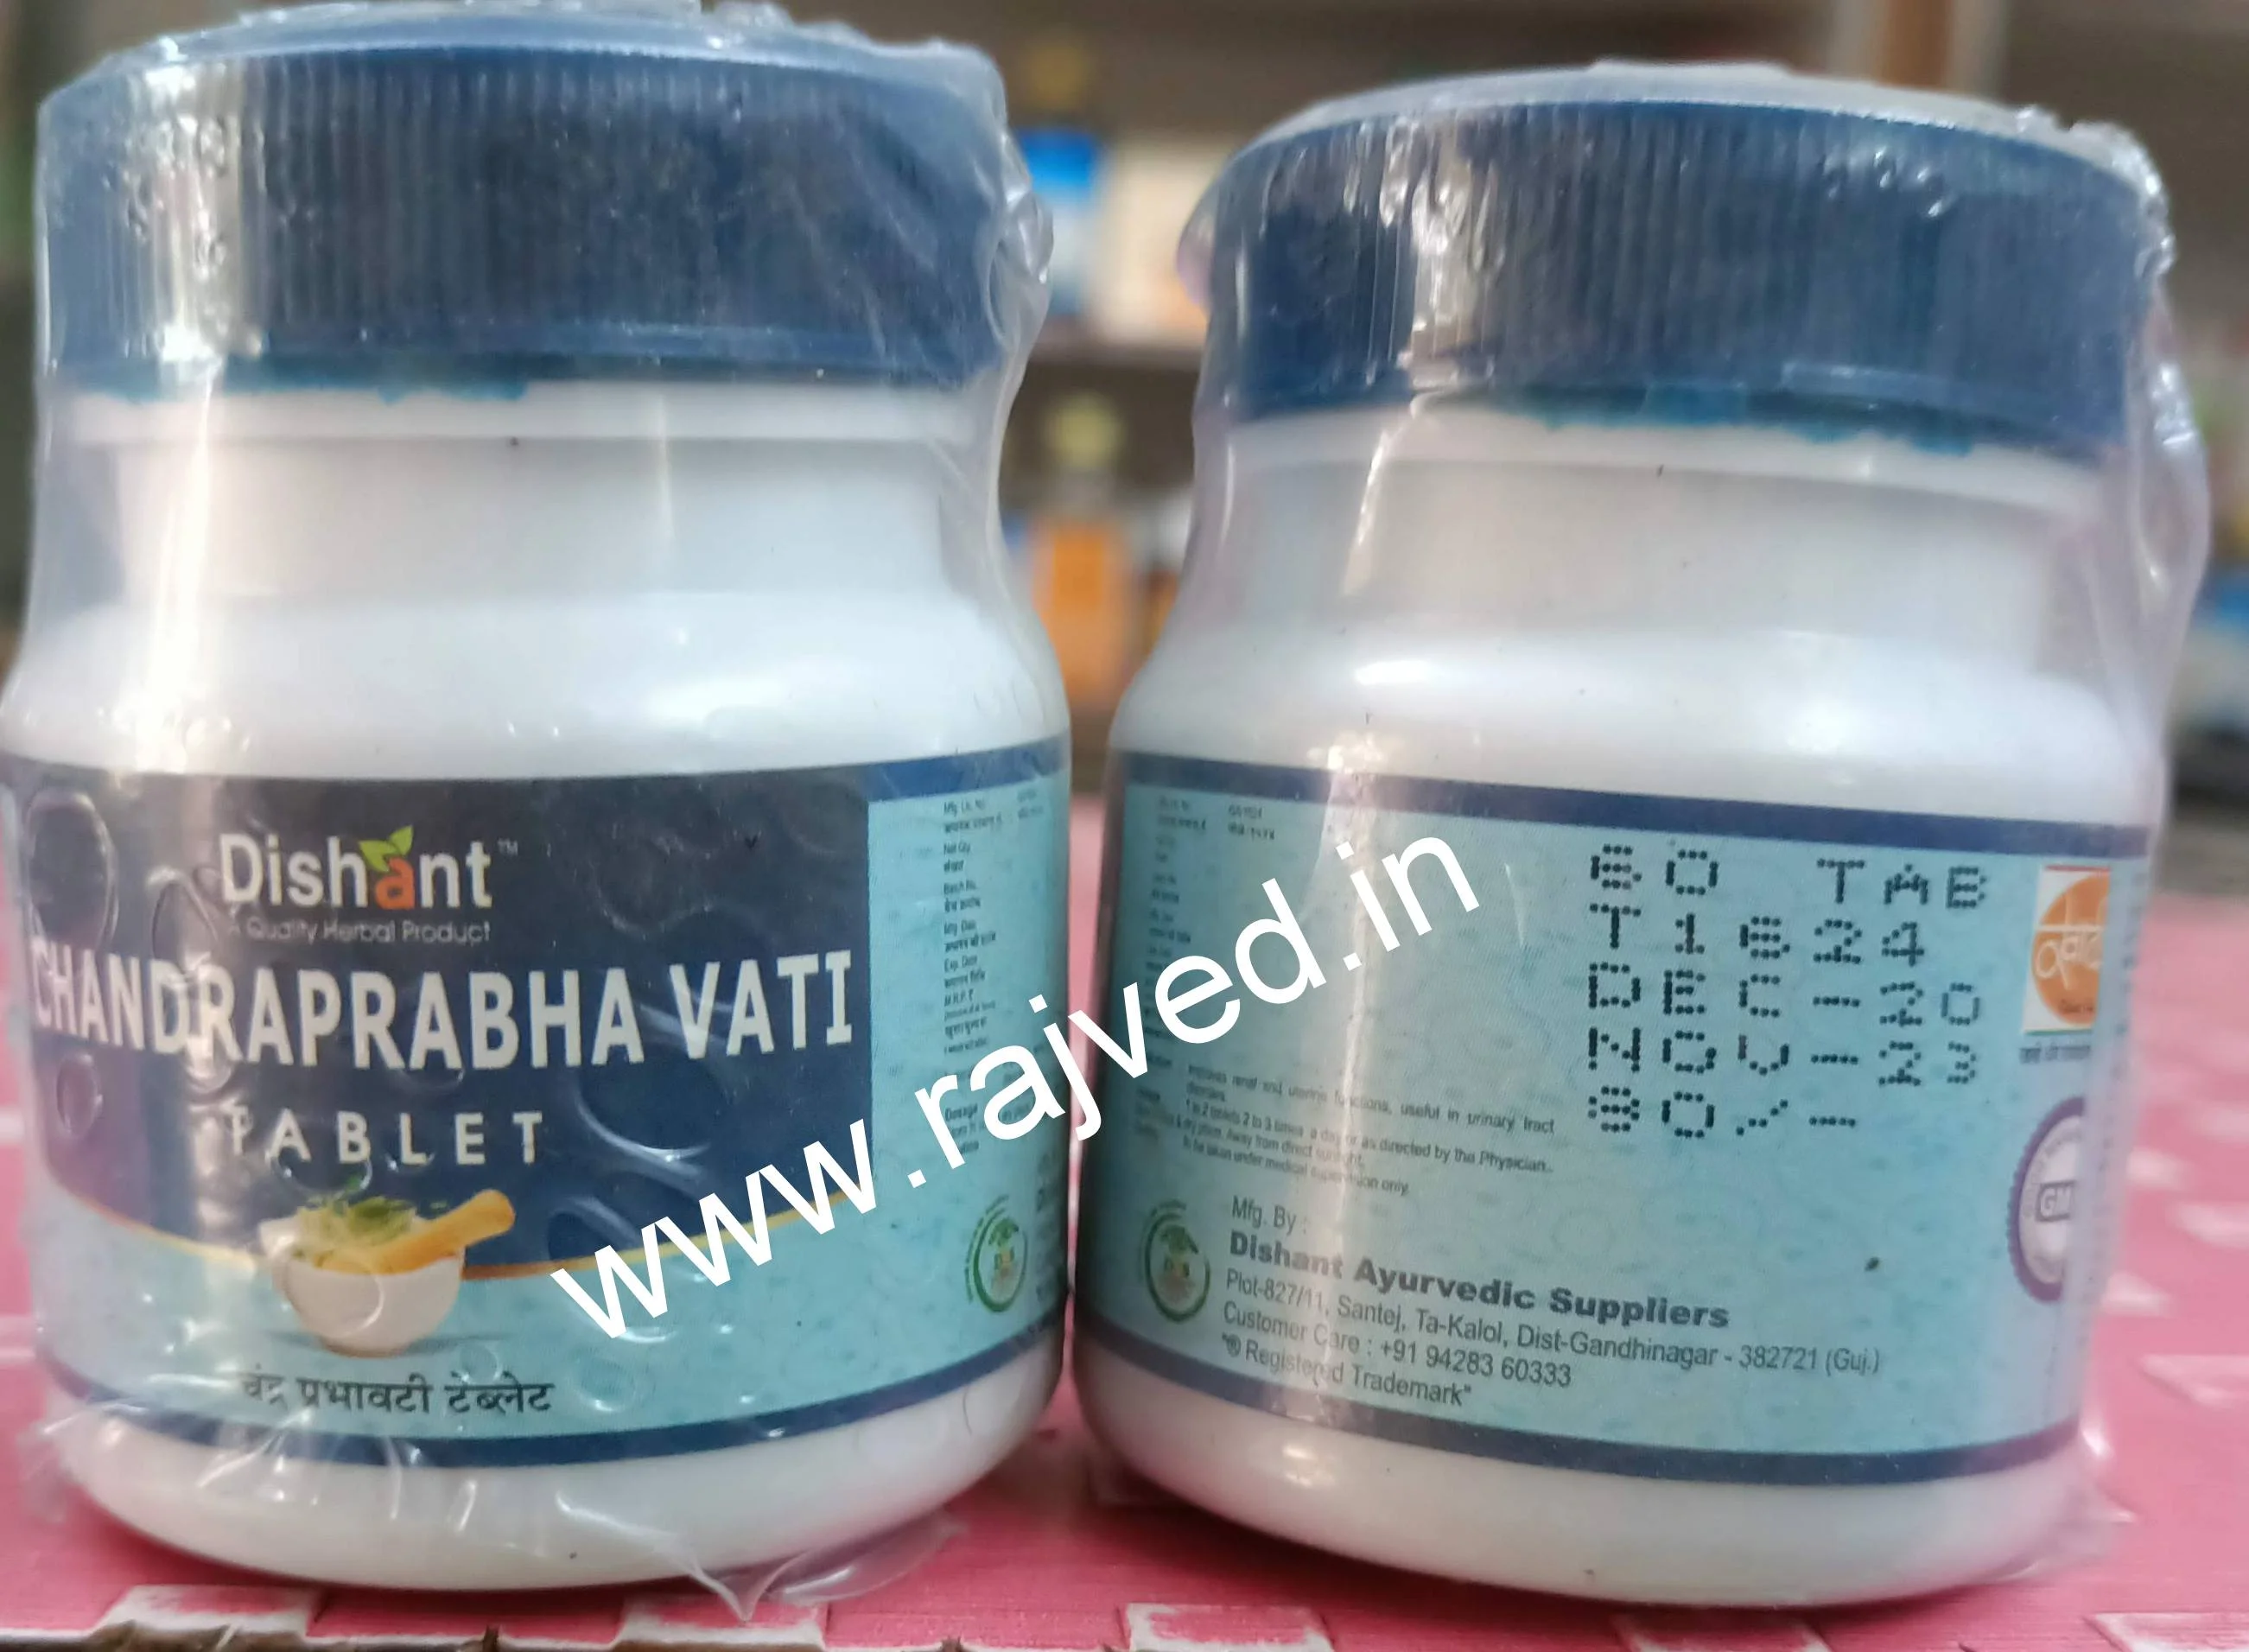 chandraprabha vati tablets 250 gm upto 20% off dishant ayurvedic suppliers